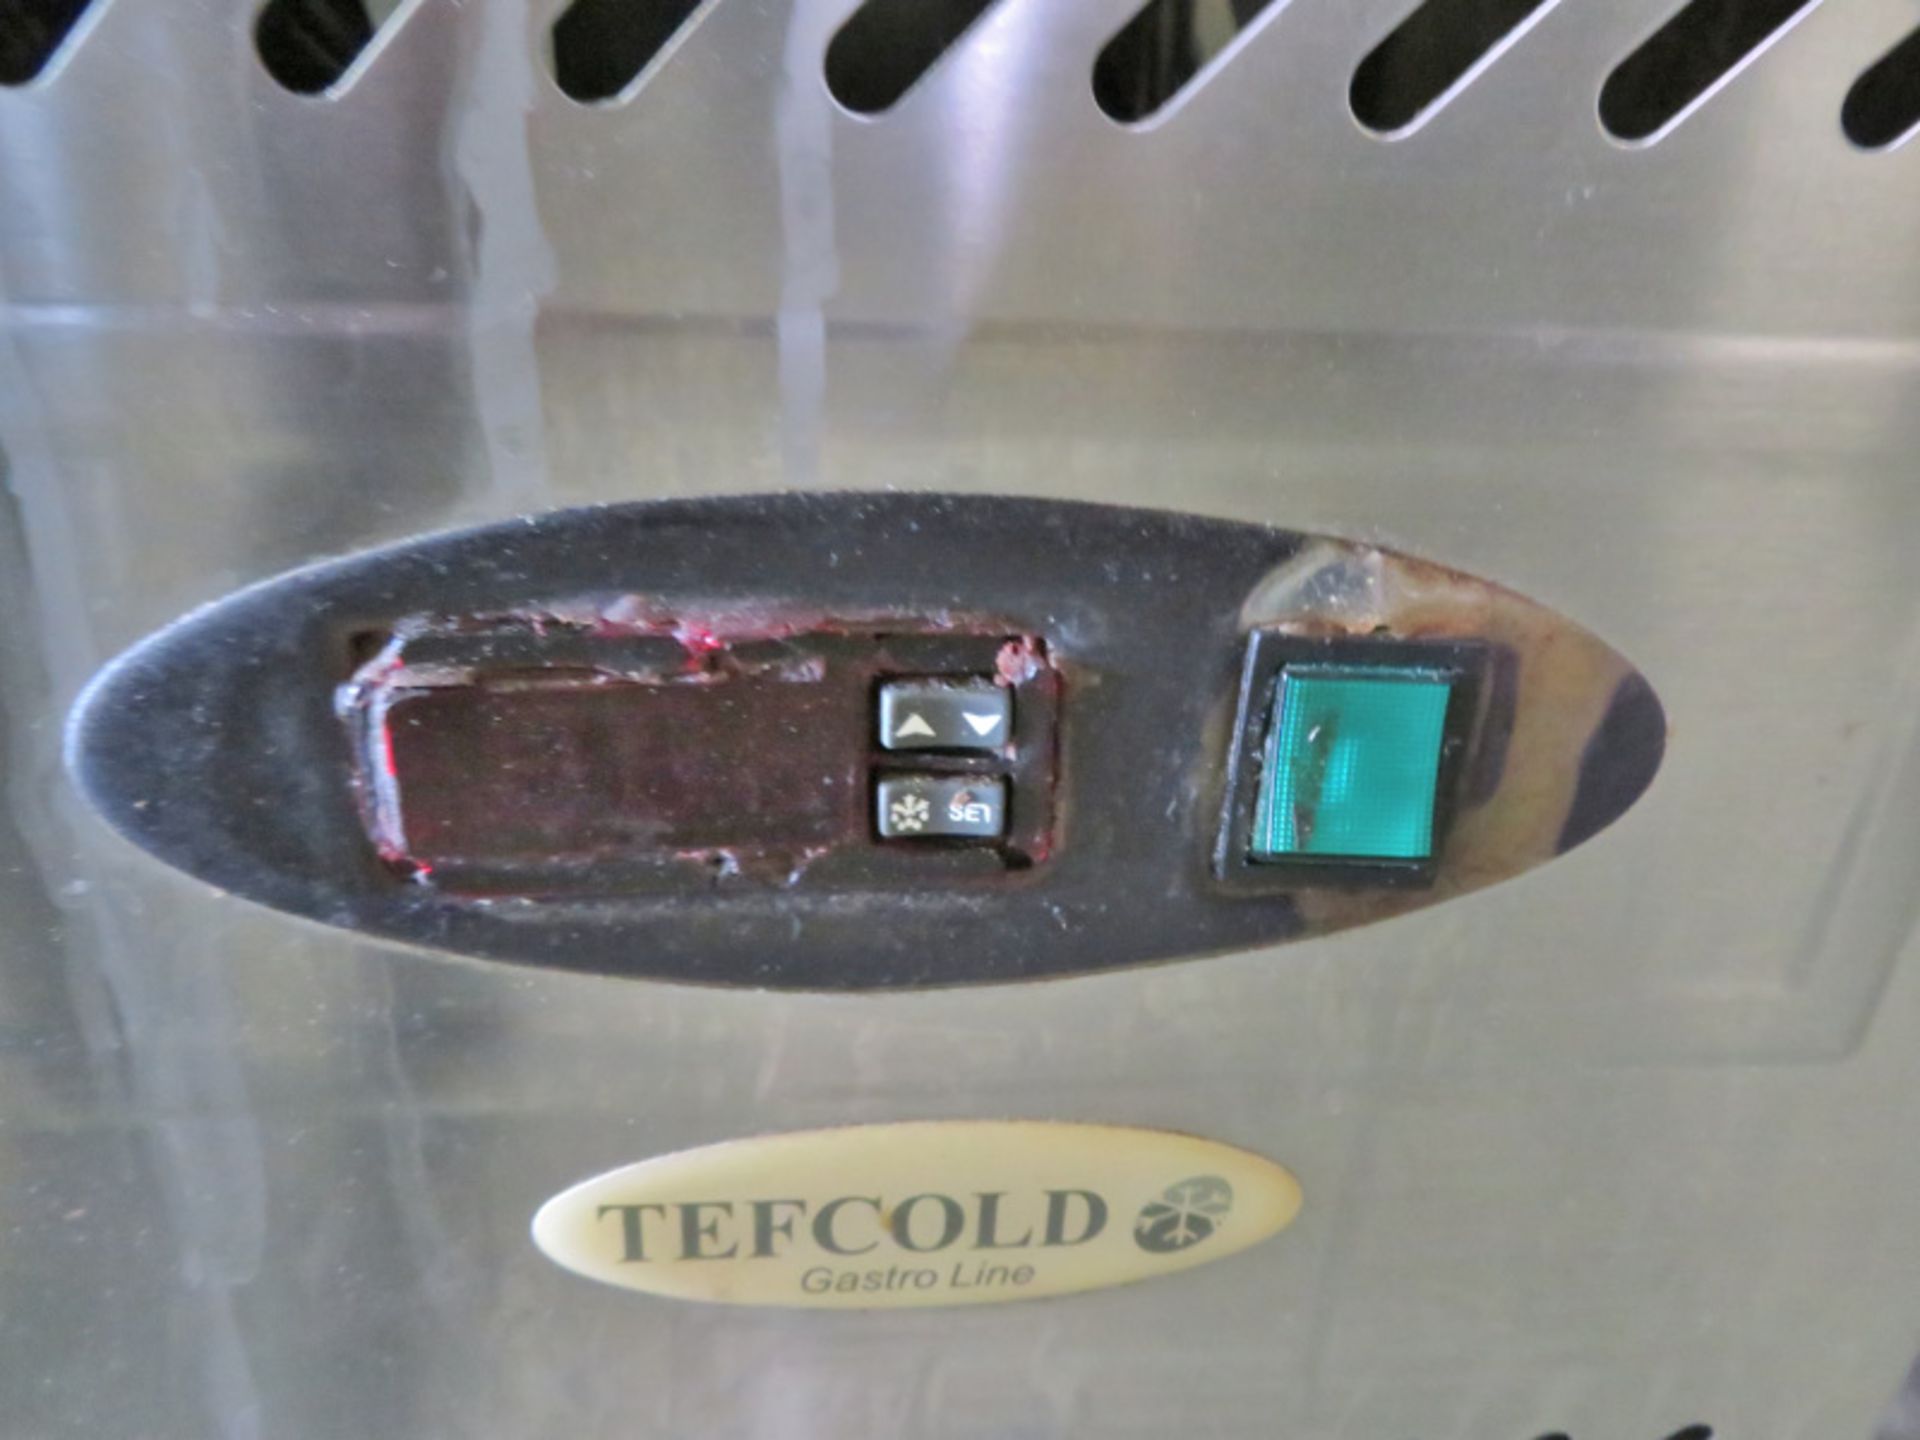 Tefcold PT1310-VK 2 Door Refrigerator L 2045mm x D 800mm x H 1415mm - Image 3 of 7